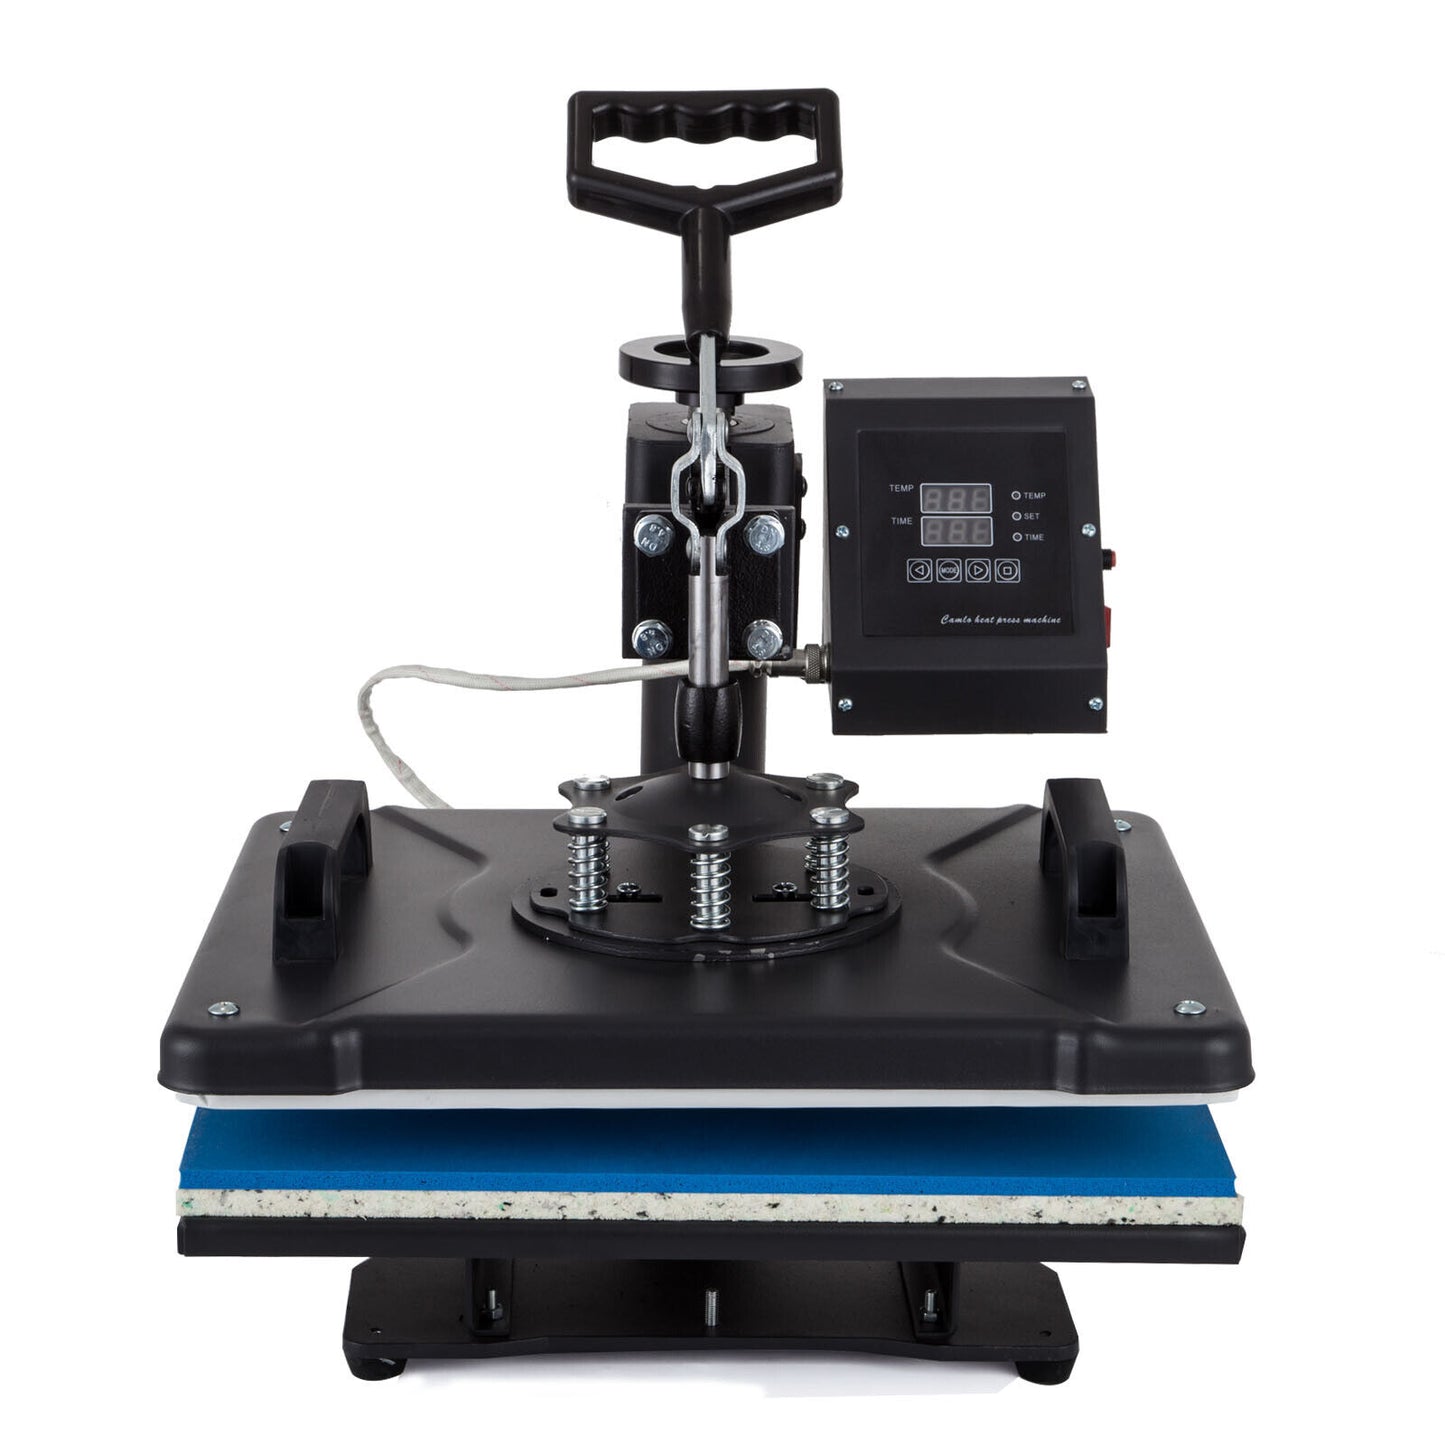 8 in 1 T-Shirt Heat Press Printing Machine 12"X15" Transfer Sublimation Printer